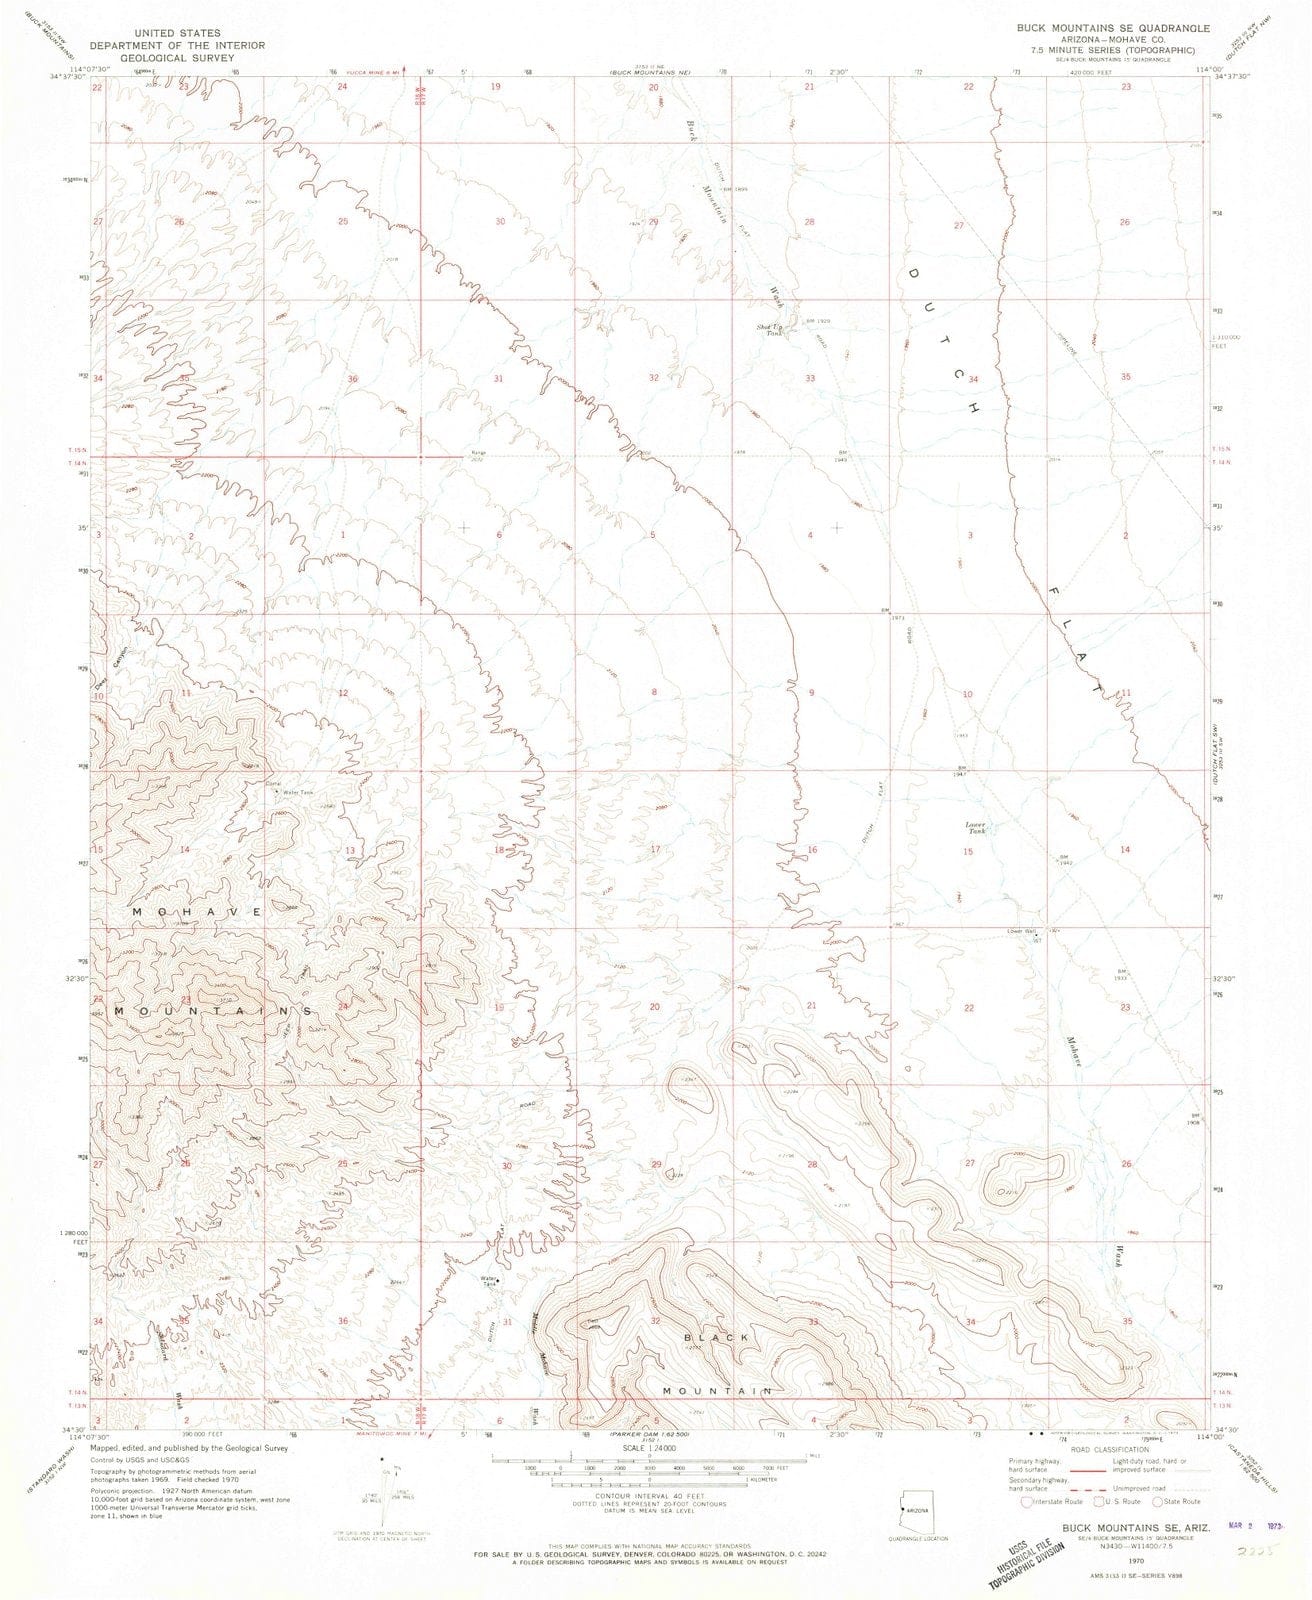 1970 Buck Mountains, AZ - Arizona - USGS Topographic Map v2